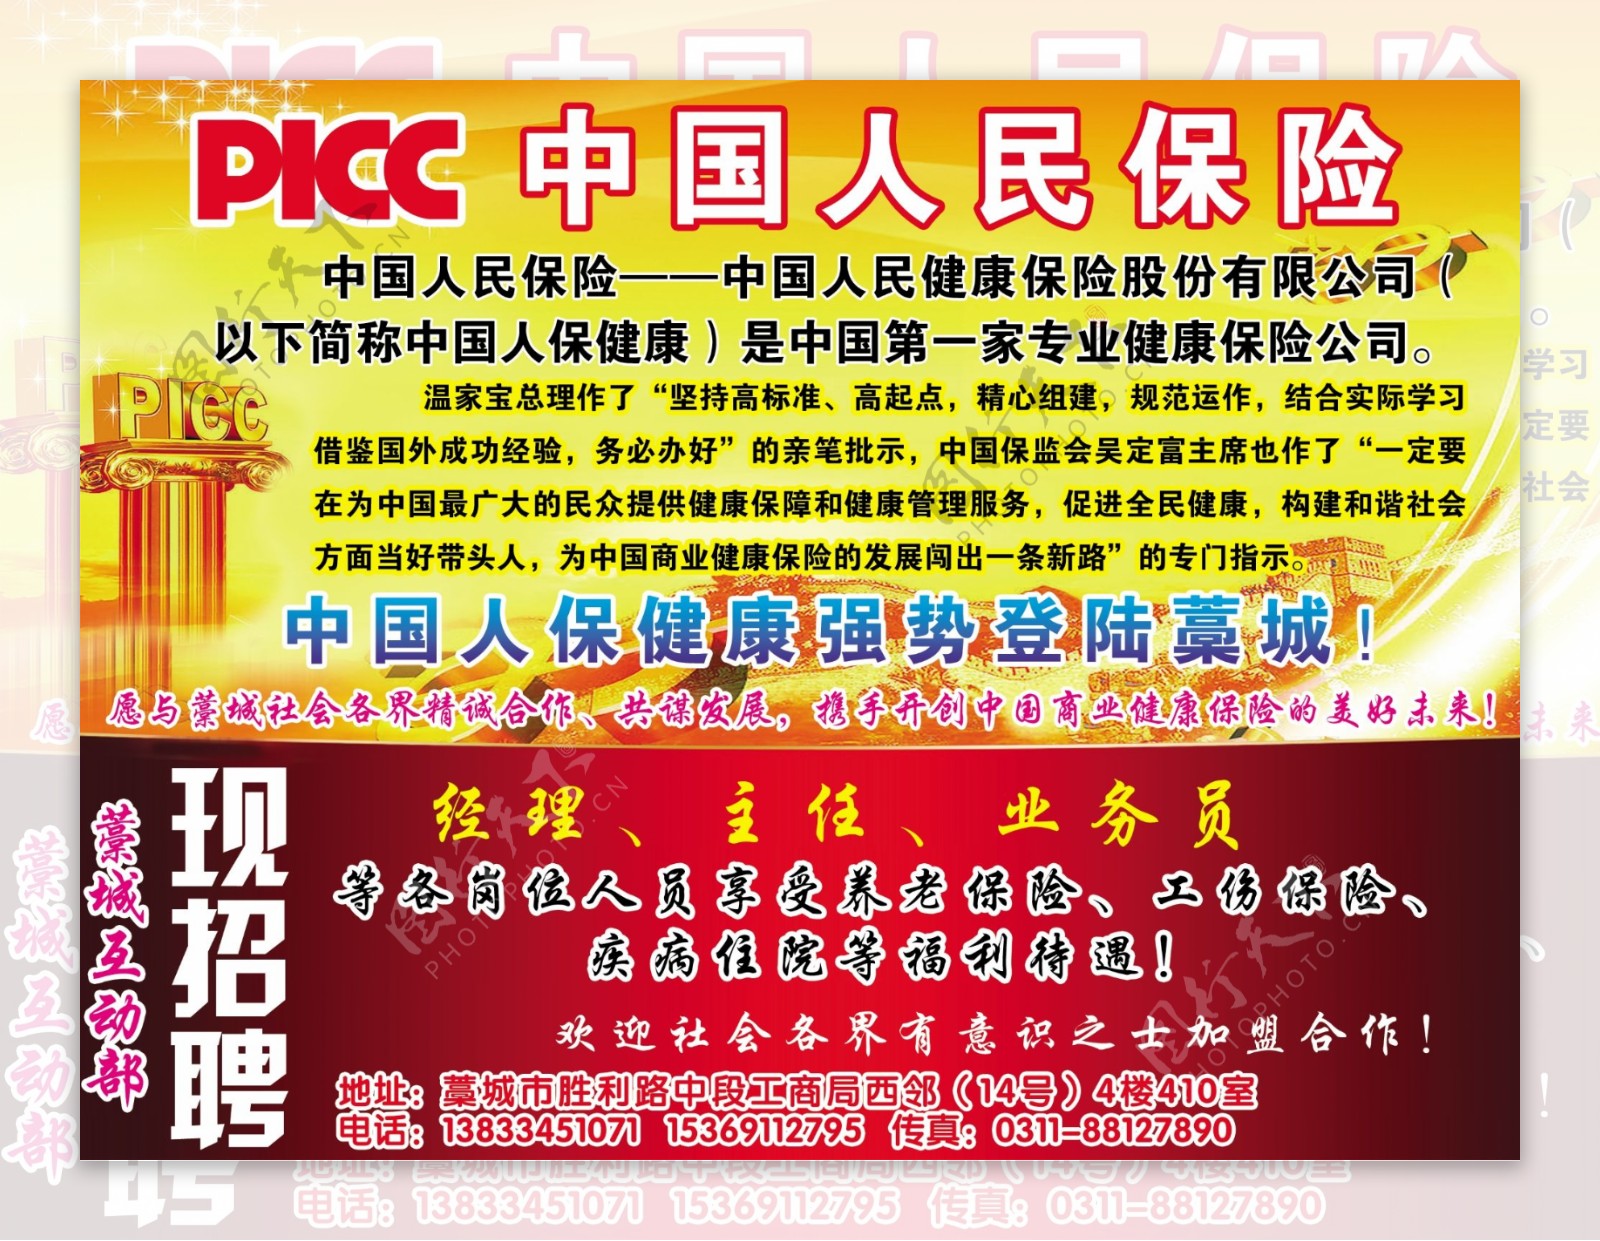 PICC中国人民健康保险招聘